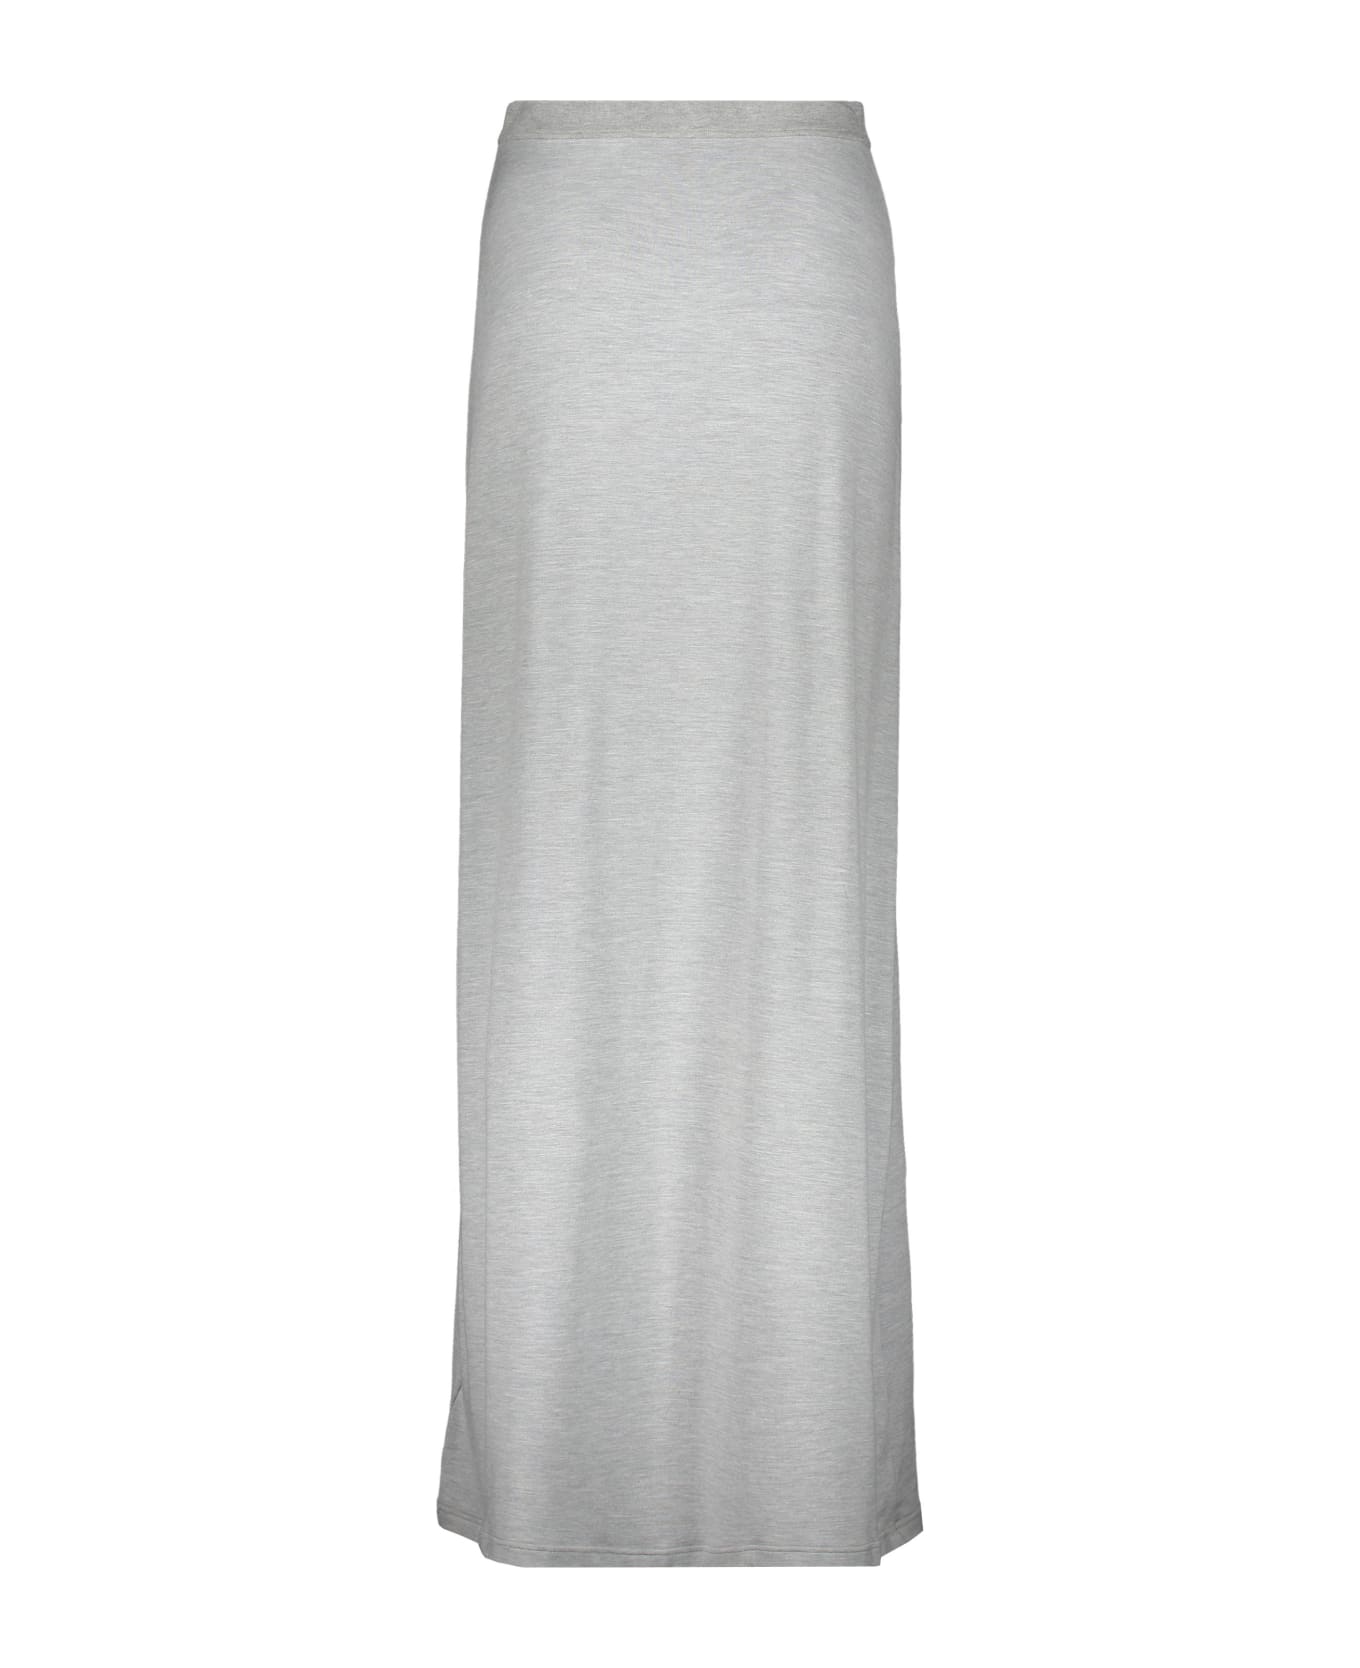 Burberry Long Skirt - grey